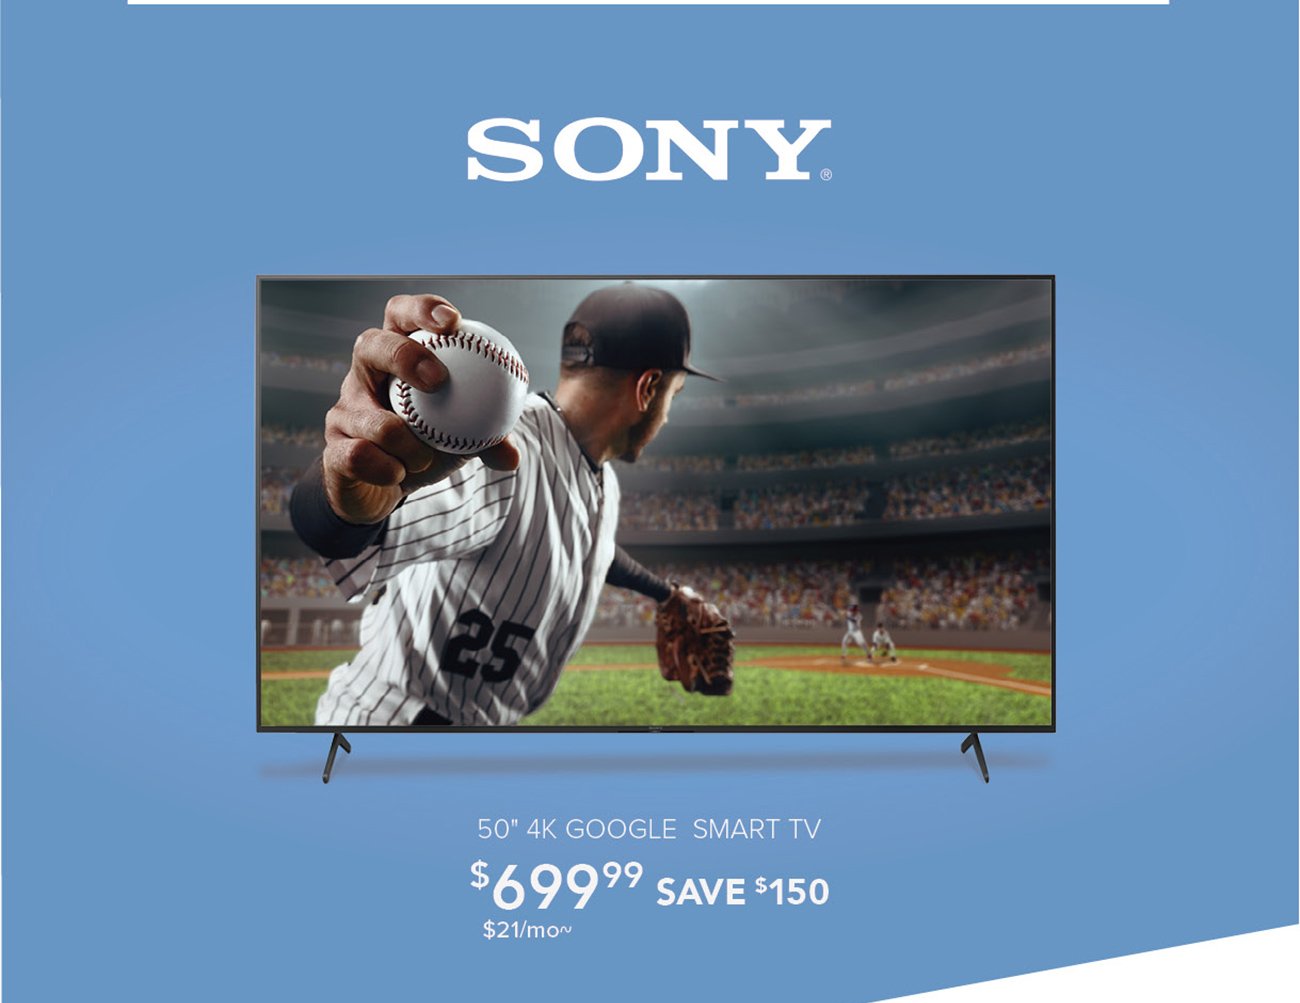 Sony-google-smart-TV